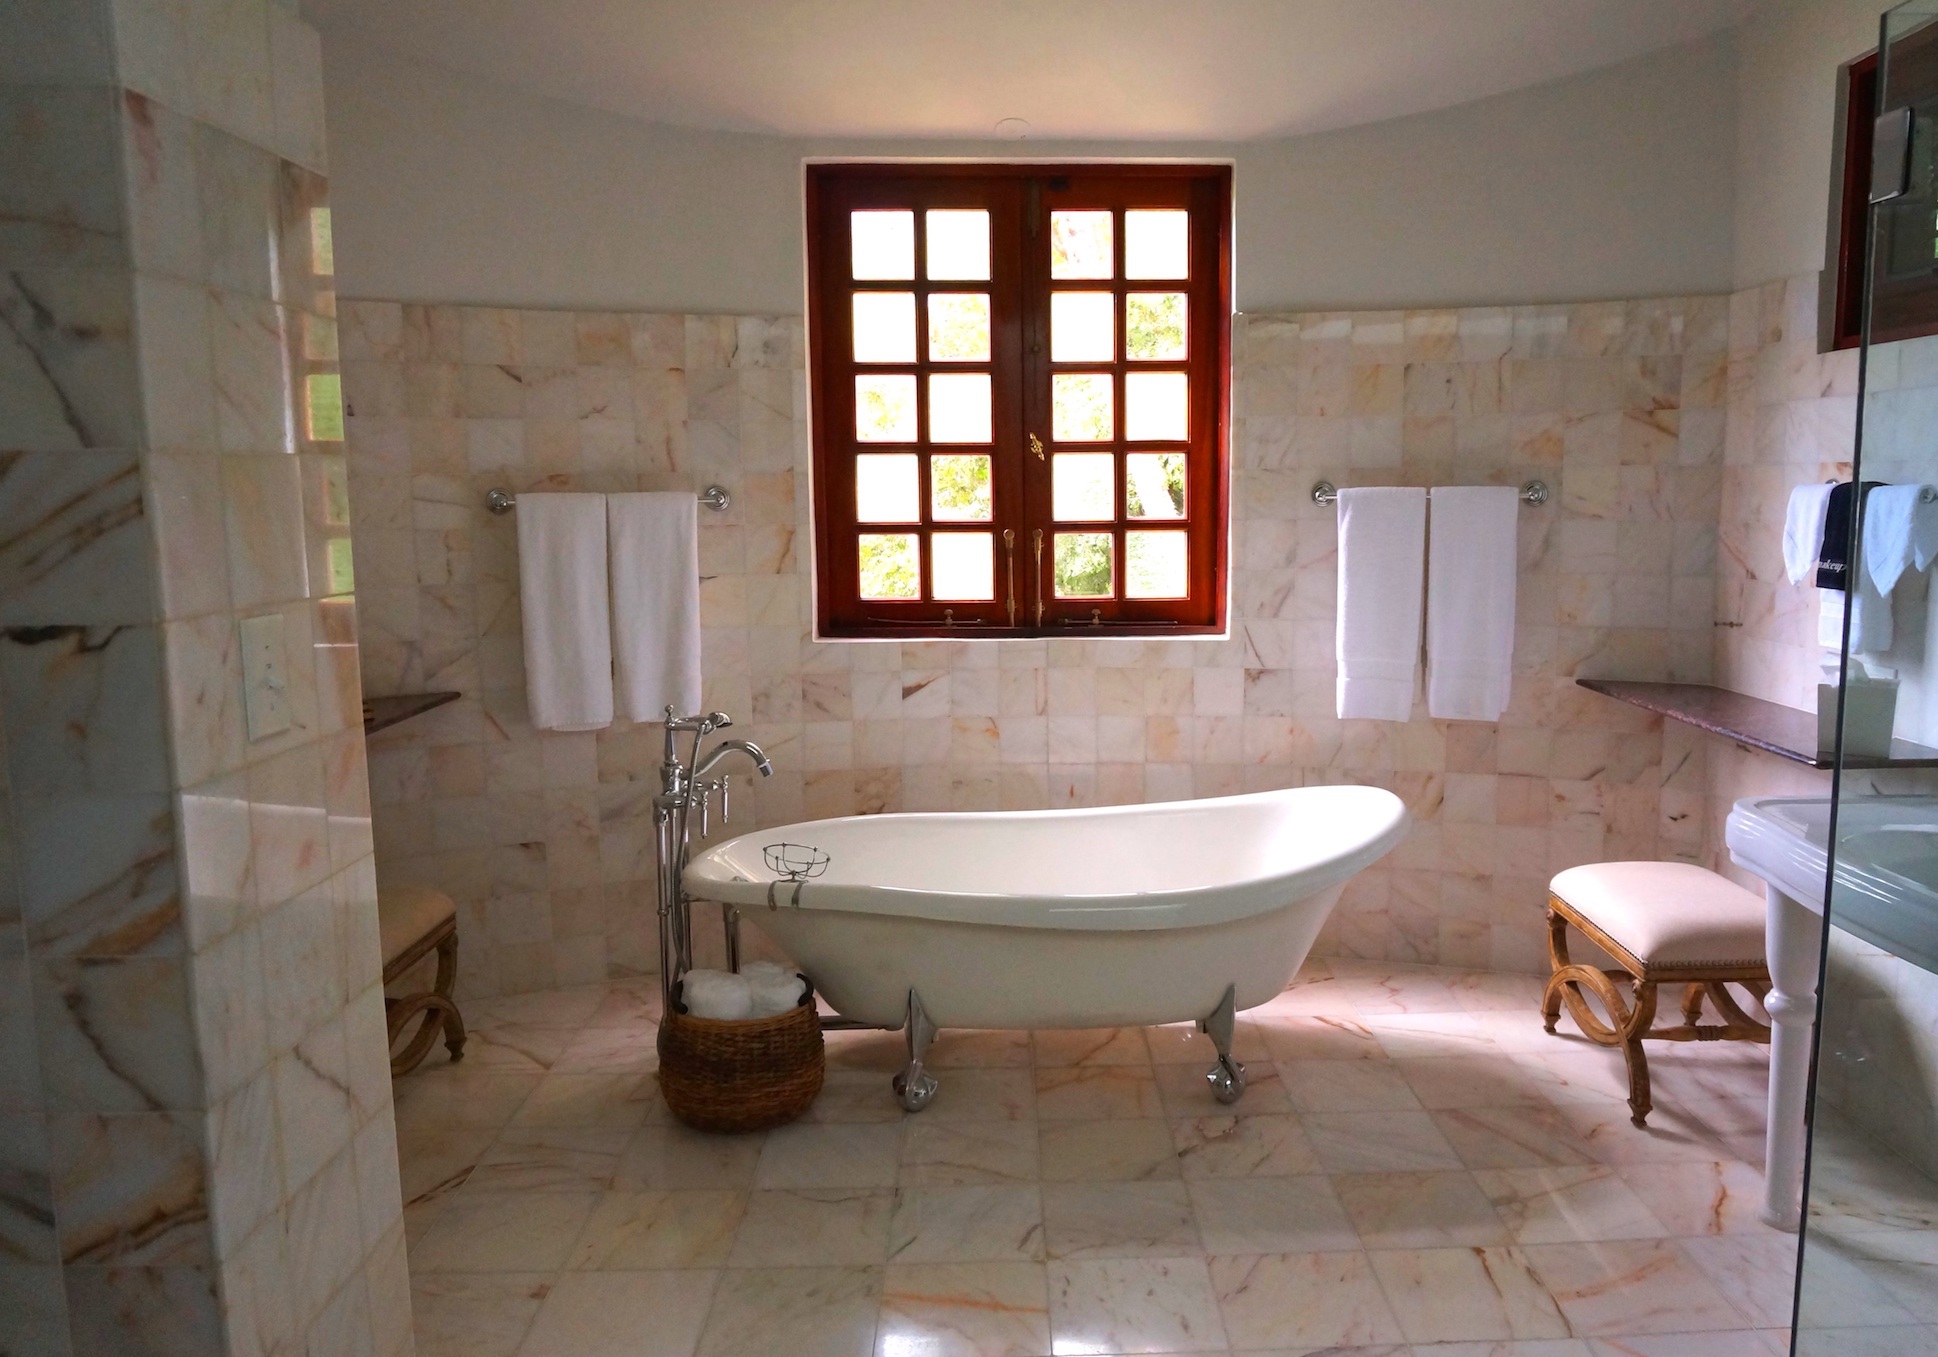 Marble and travertine bathroom SoFloClean in Boca Raton